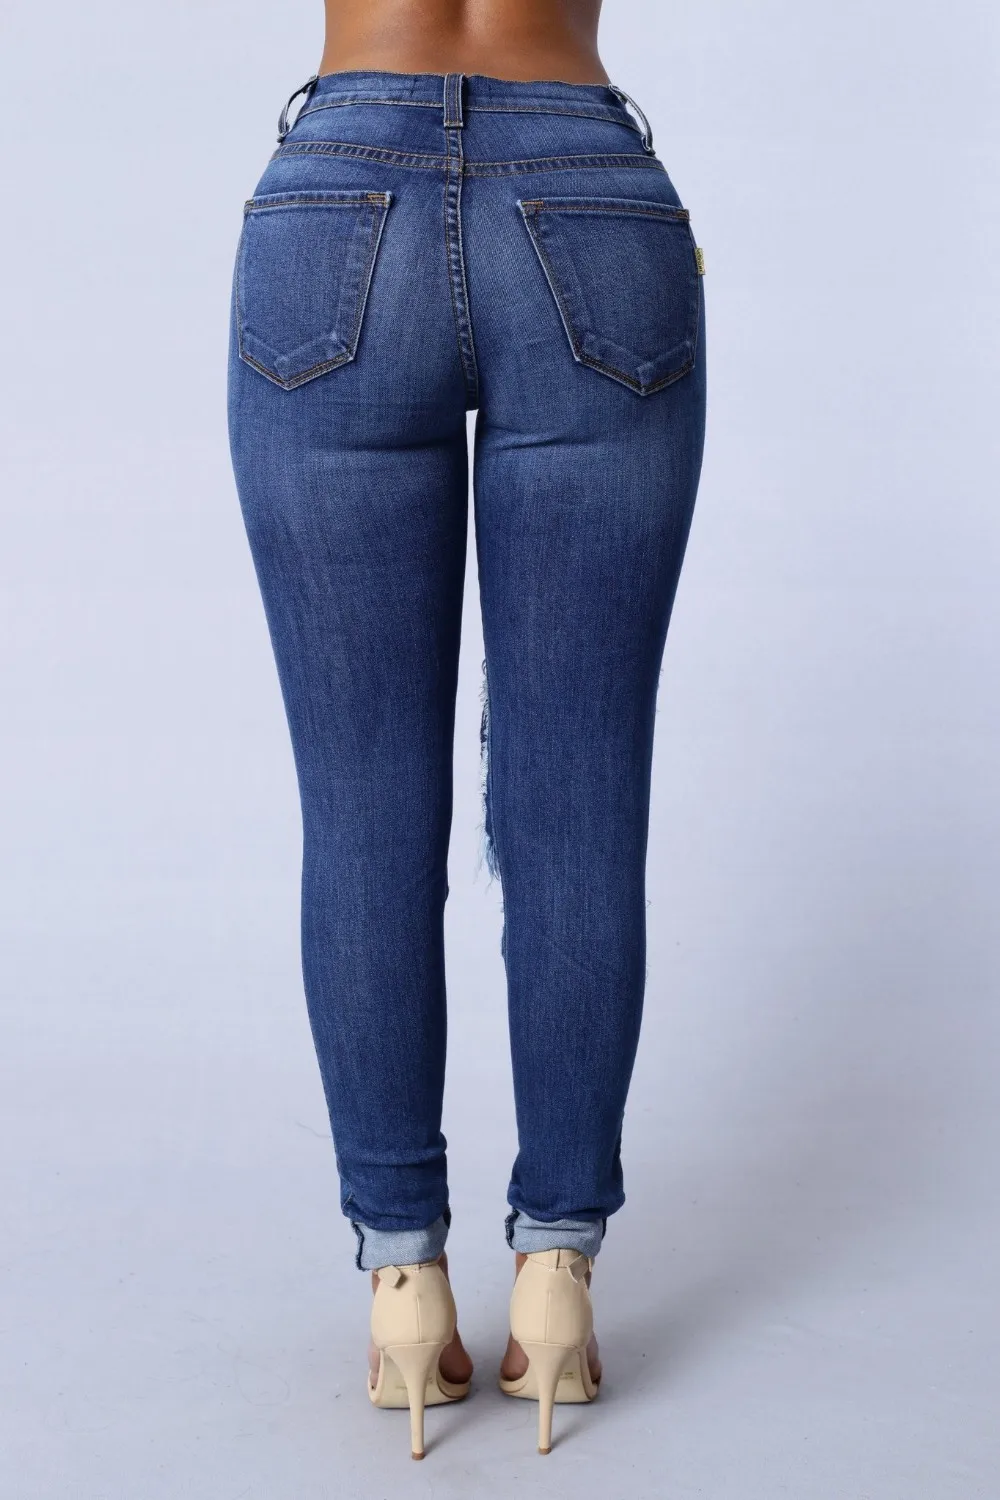 High Quality Hot Sexy Women Ladies Tight Jeans Medium Blue Beach Bum ...